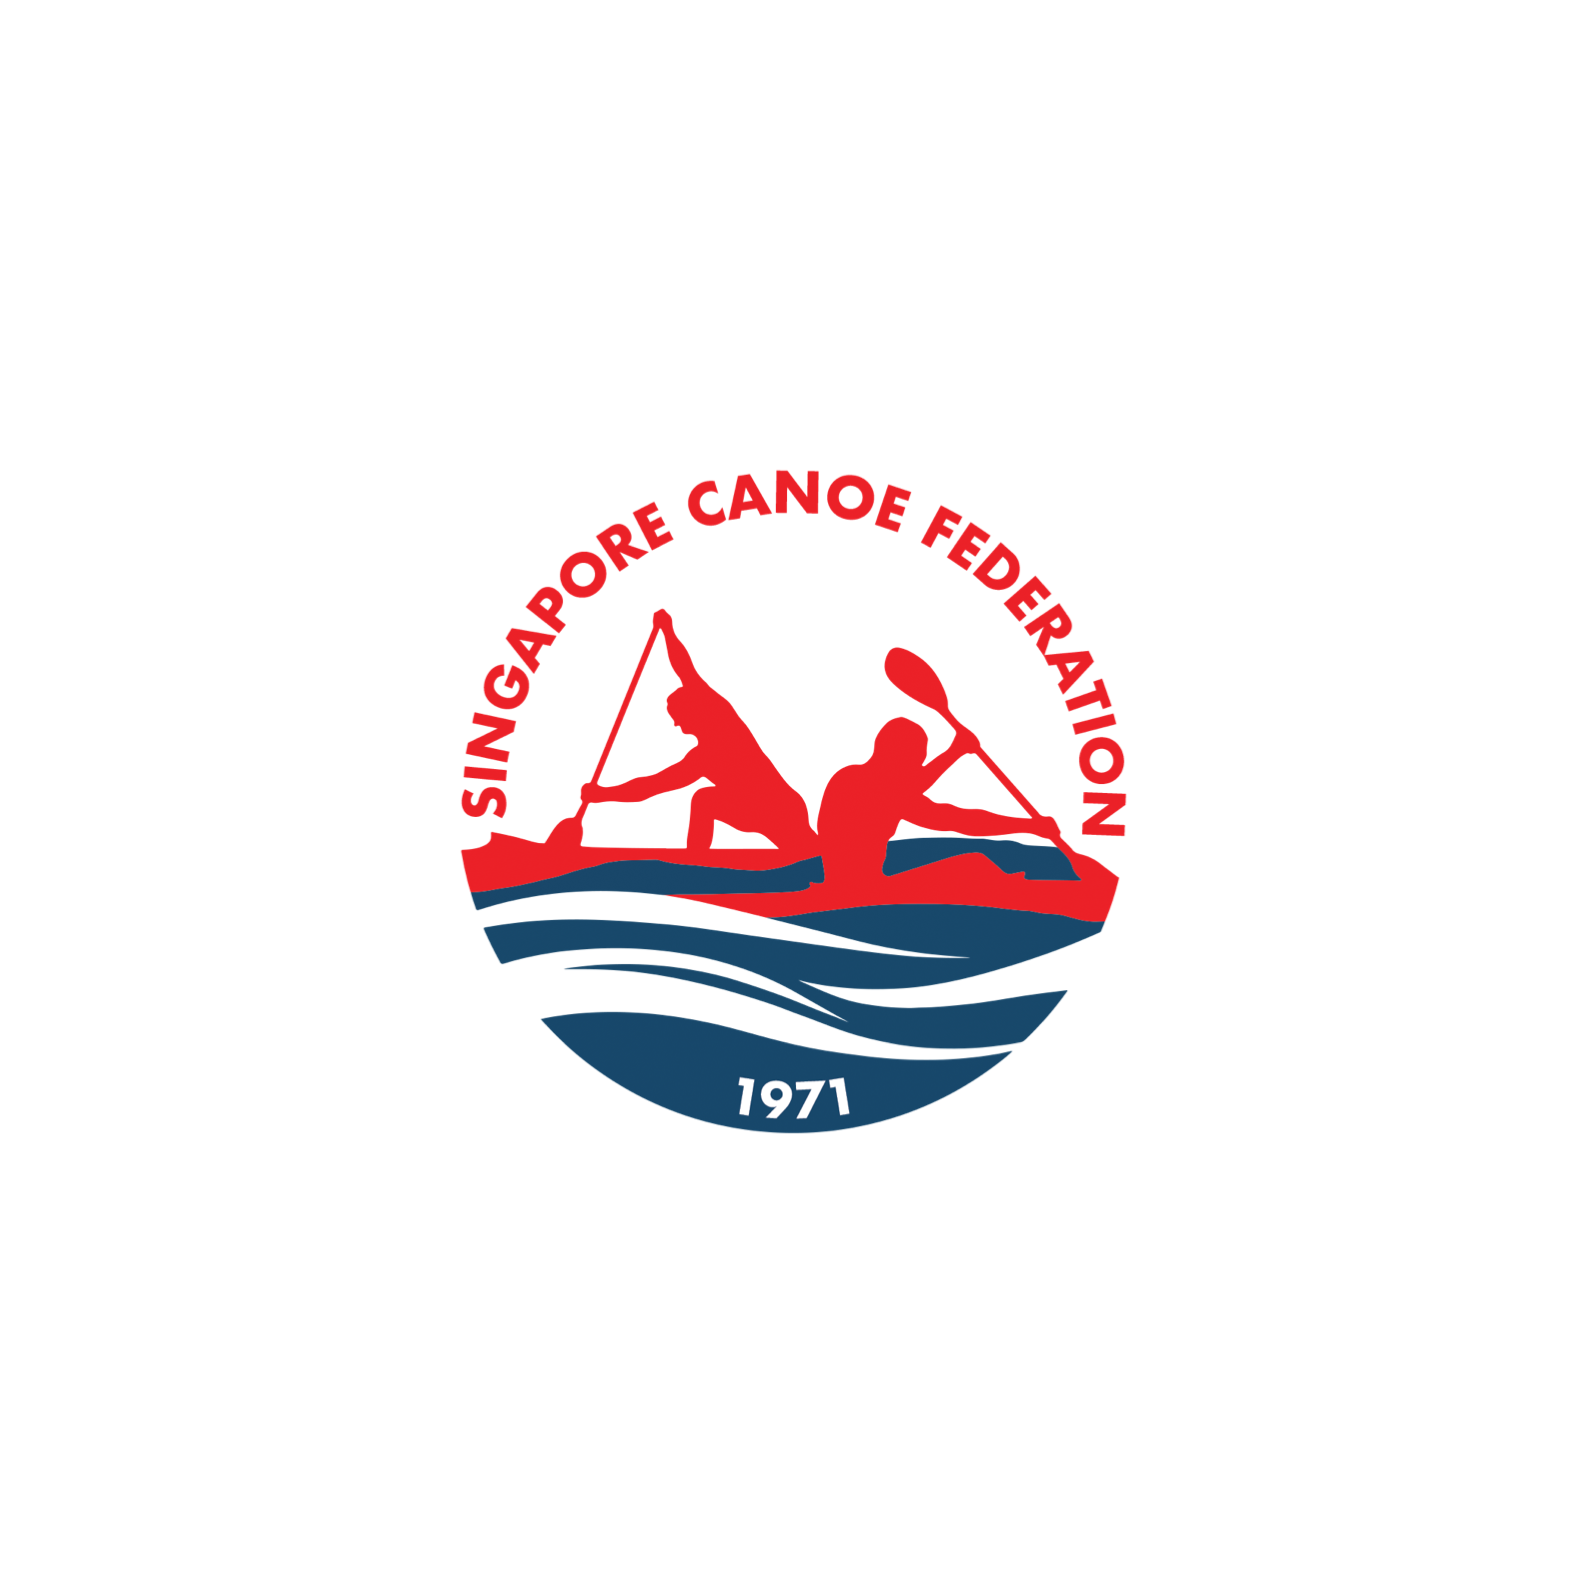 Introducing Singapore Canoe Federation's new logo